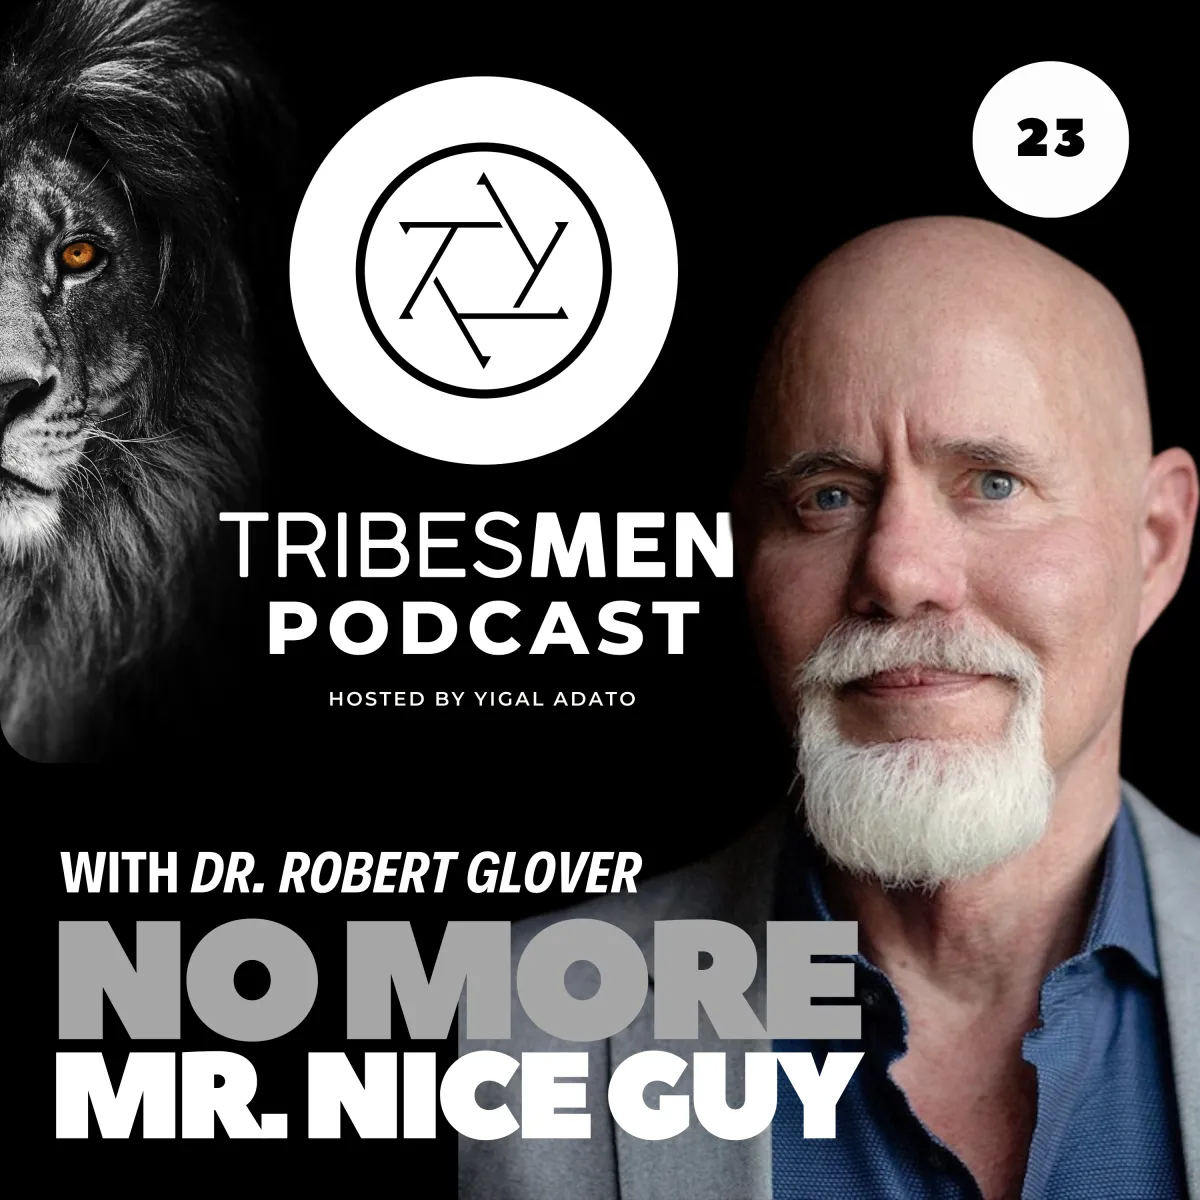 Tribesmen Podcast Episode 23 with Robert Glover